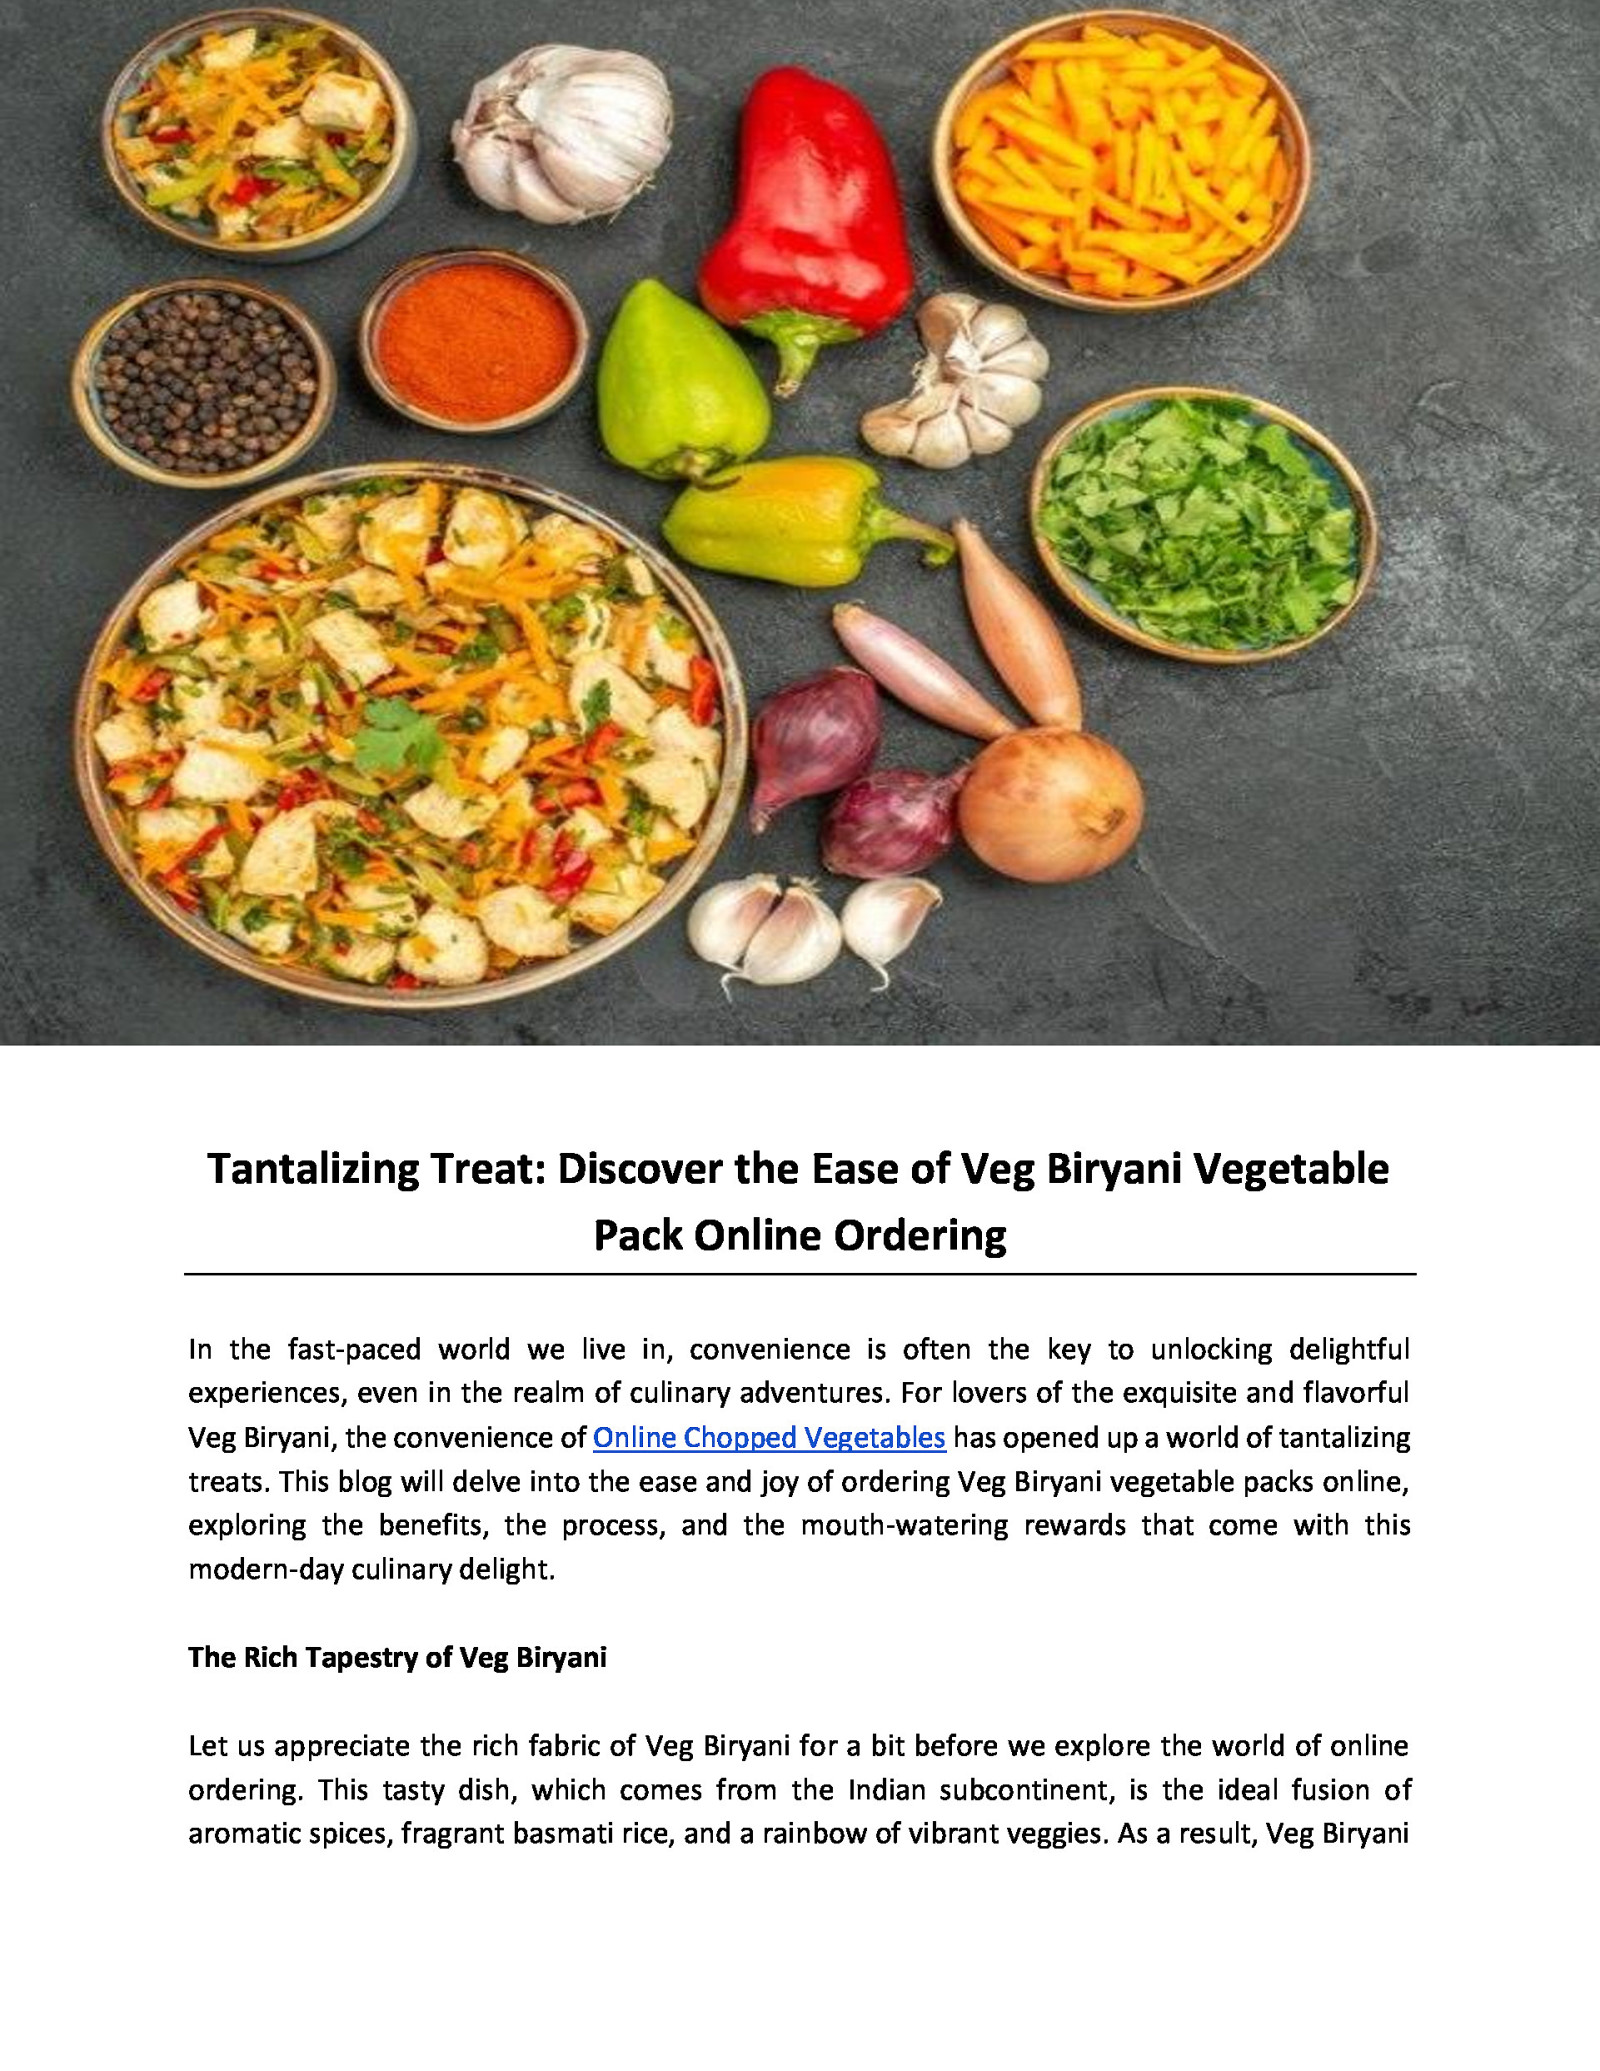 Discover the Ease of Veg Biryani Vegetable Pack Online Ordering